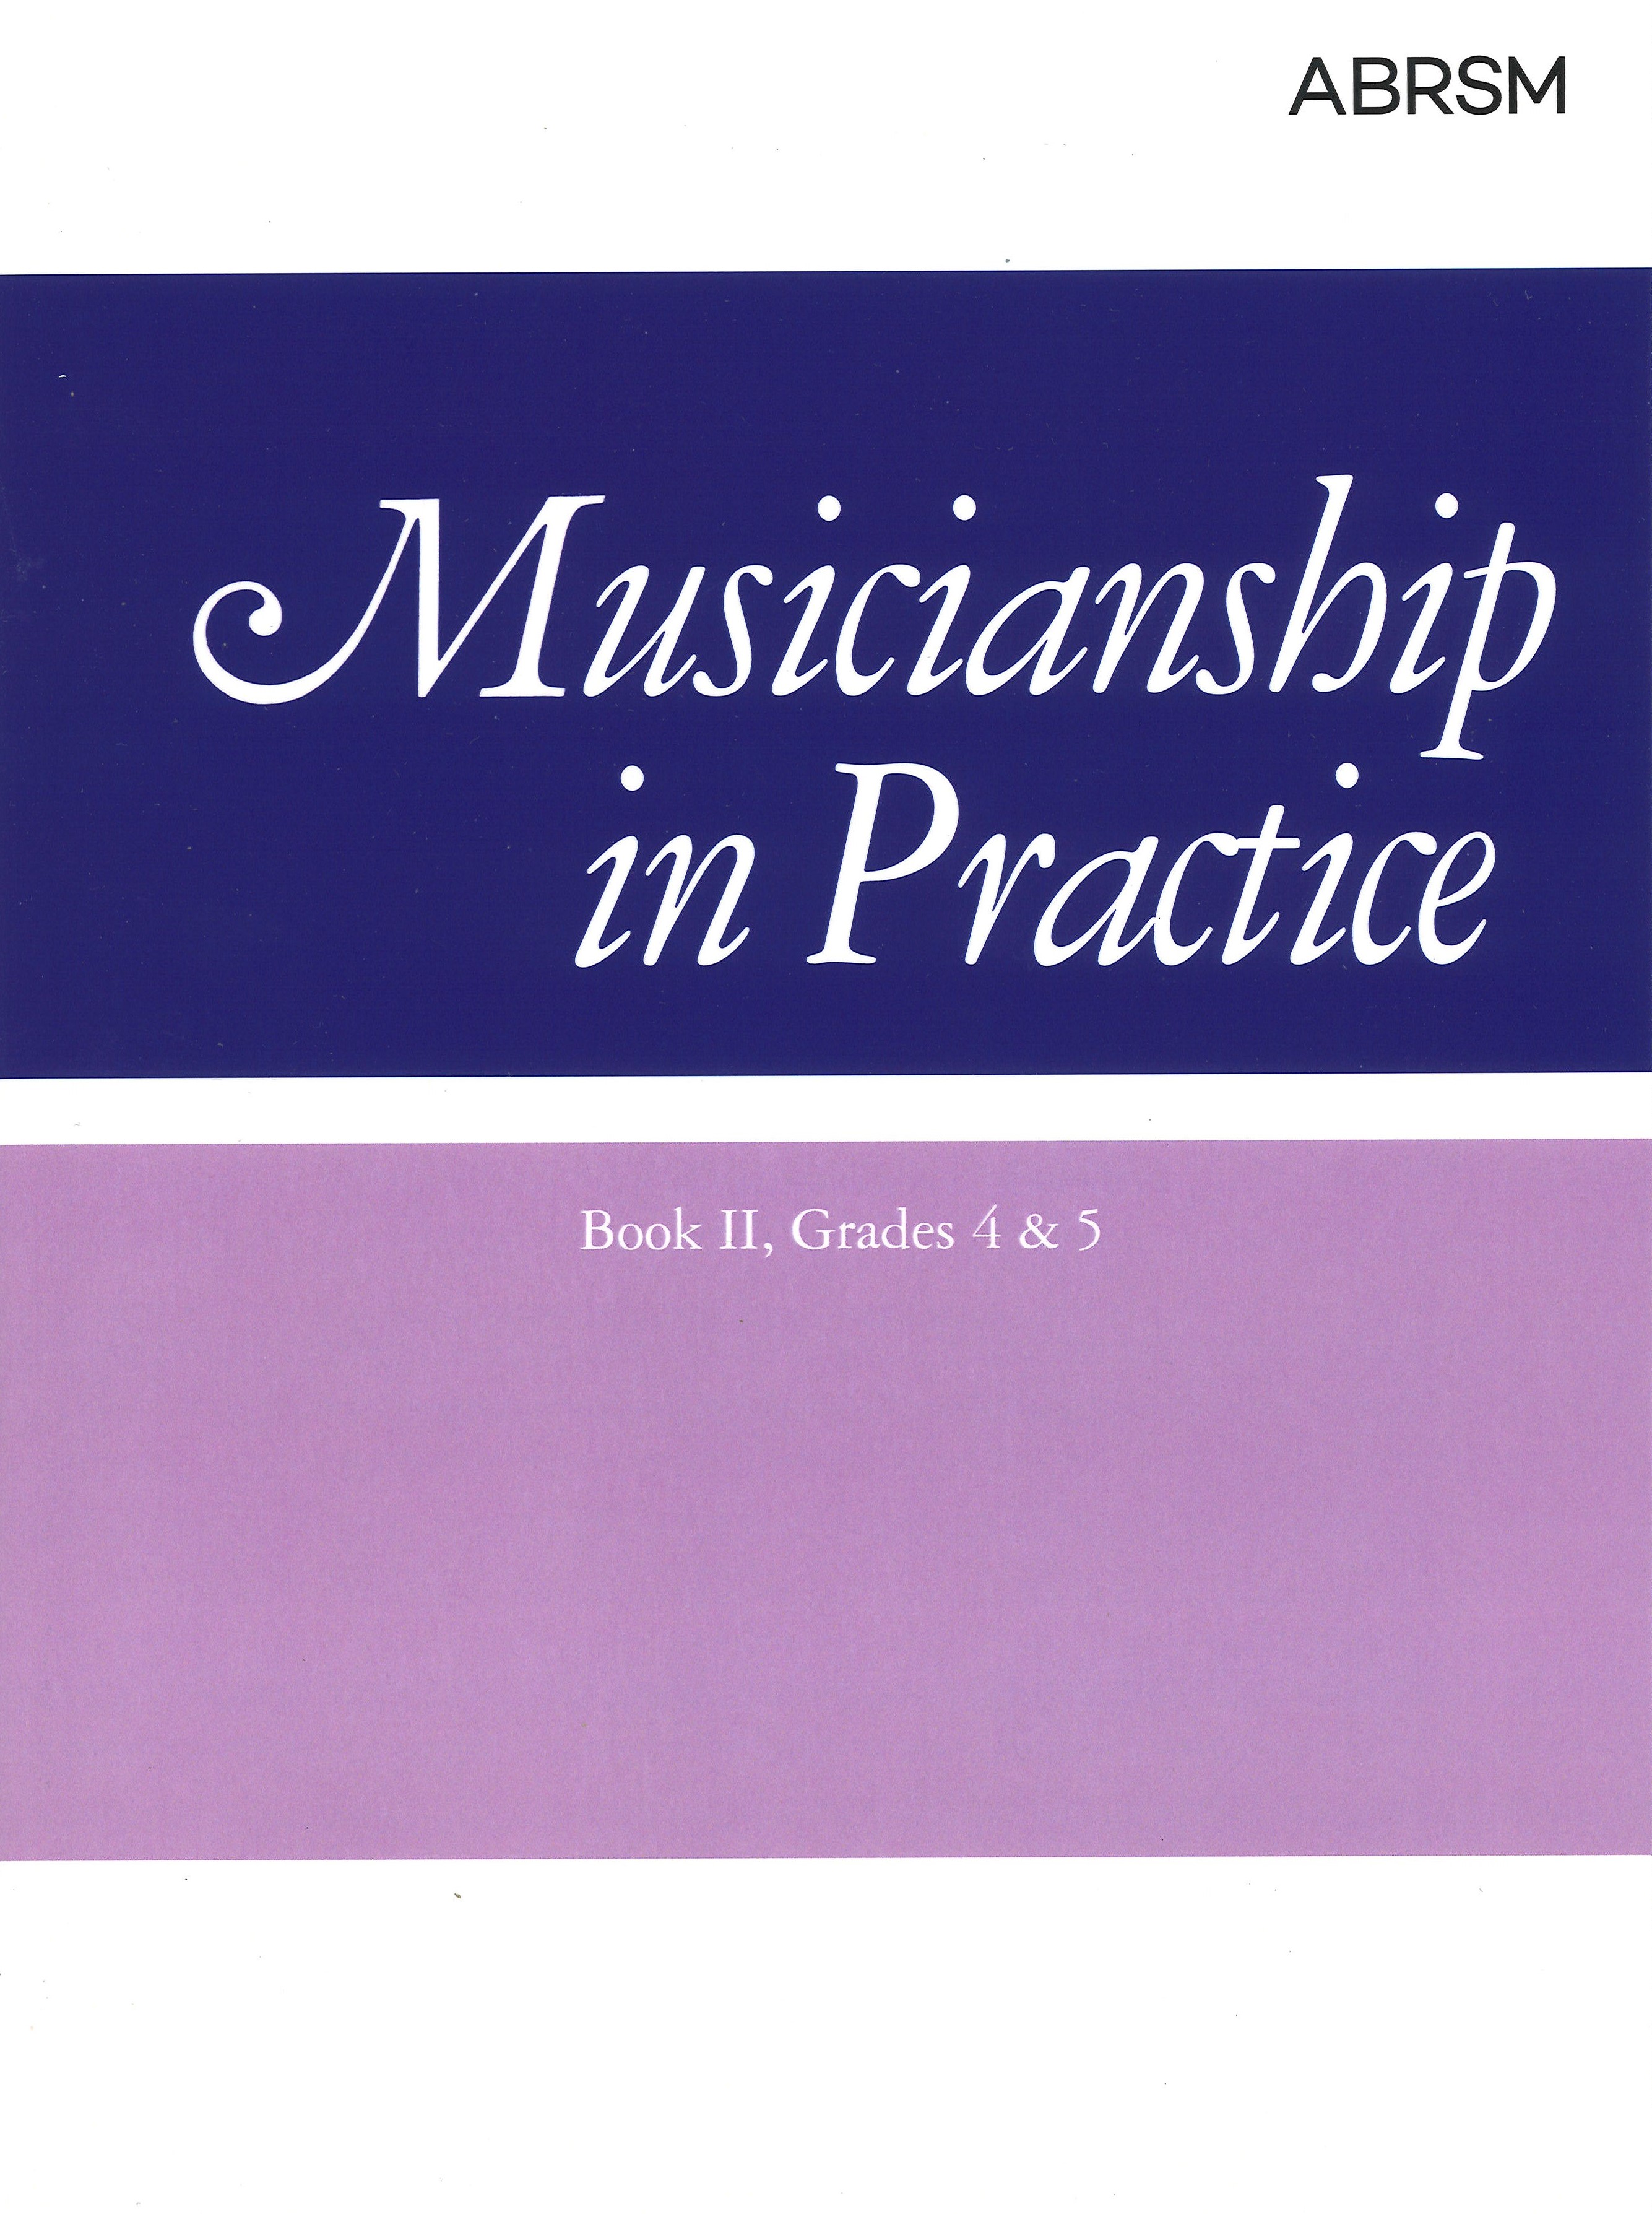 Musicianship In Practice Book 2 Grades 4-5 Abrsm Sheet Music Songbook